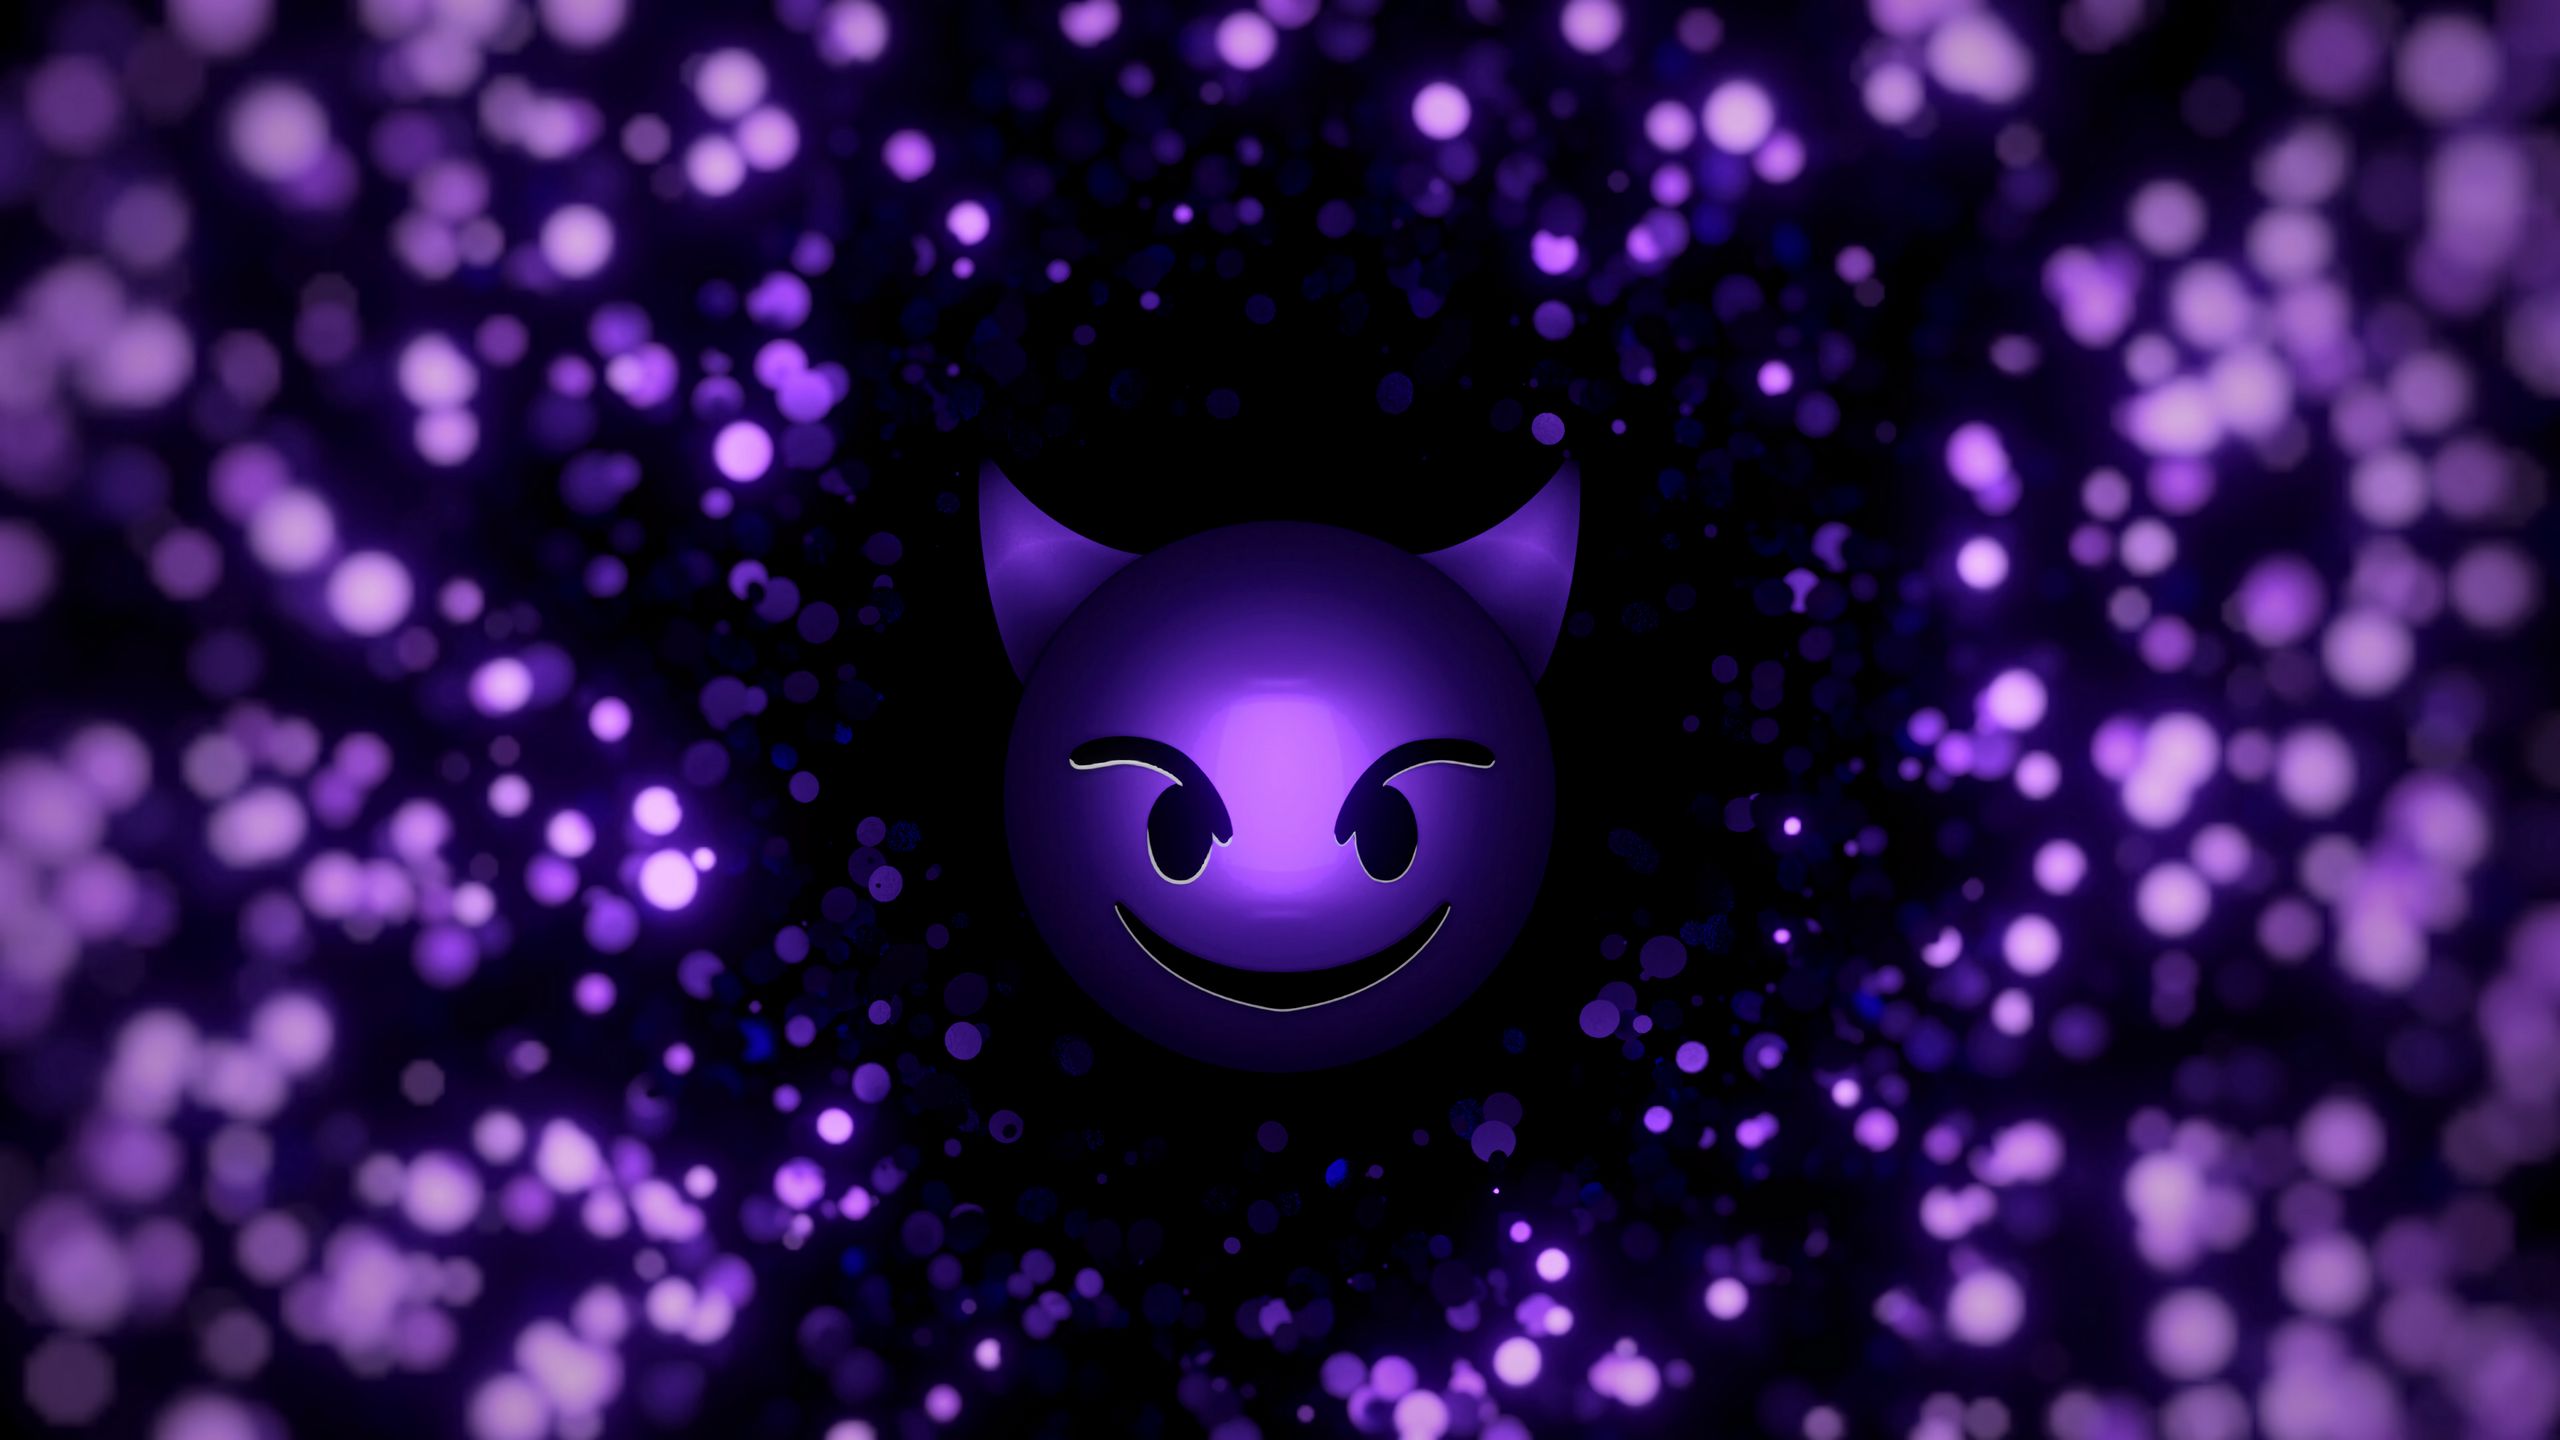 Download wallpaper 2560x1440 smile, smiley, devil, particles, purple  widescreen 16:9 hd background